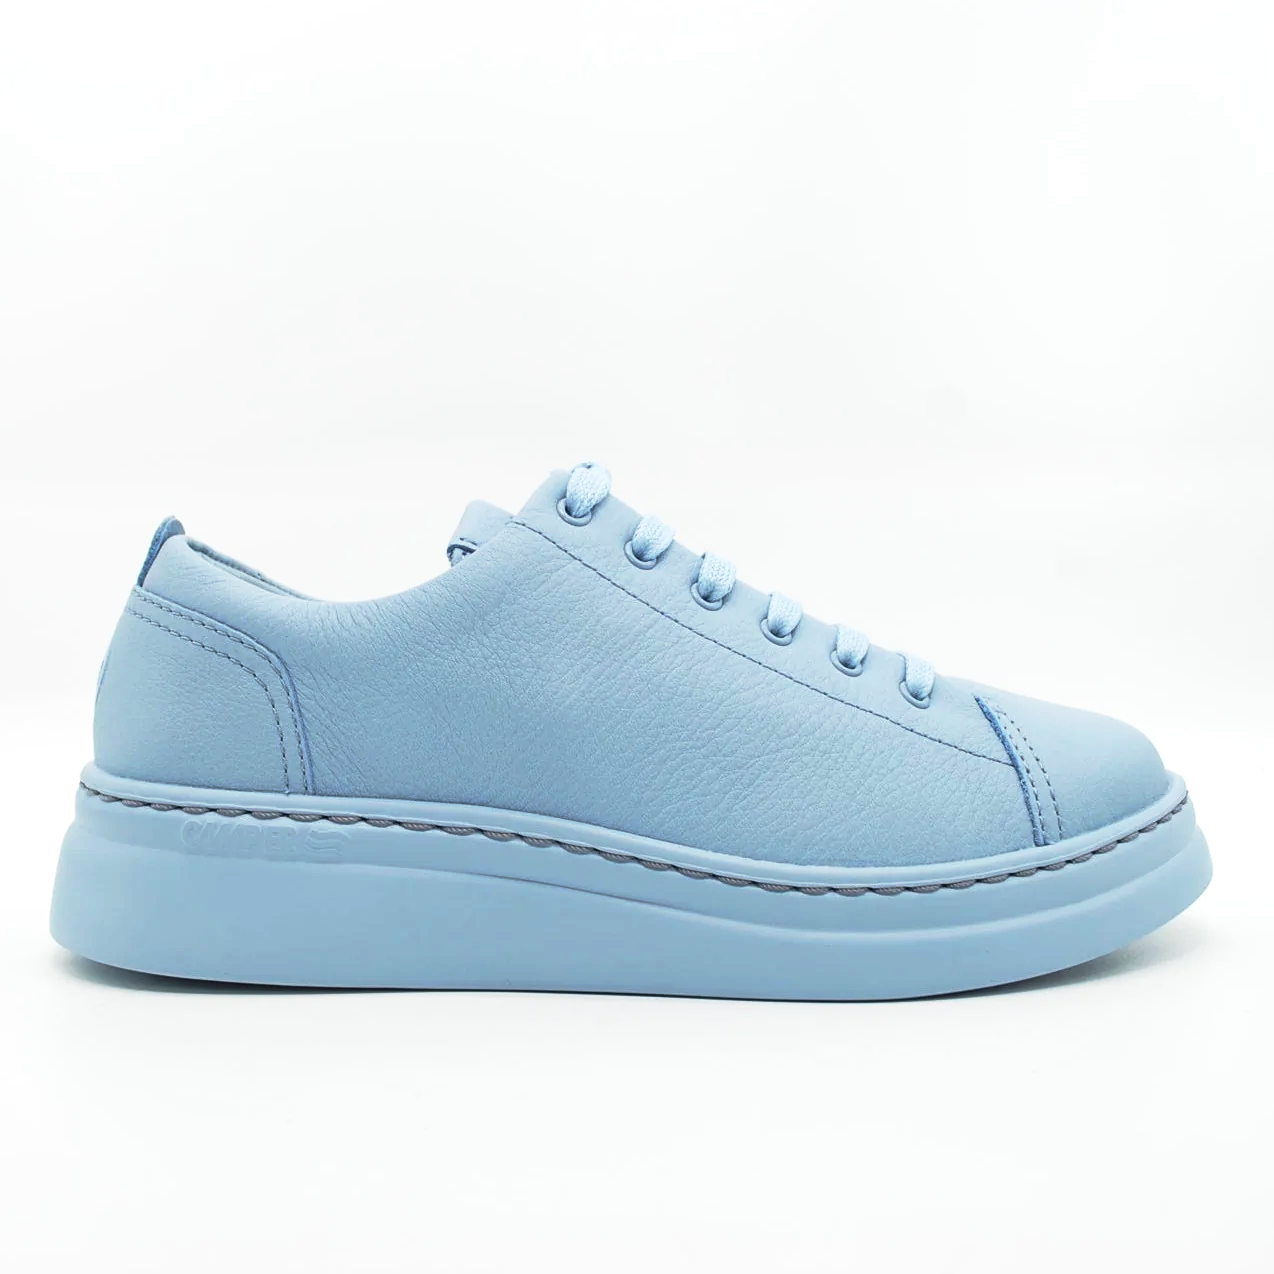 sneakers-camper-runner-up-35-azzurro-pelle-urban-shoes.png